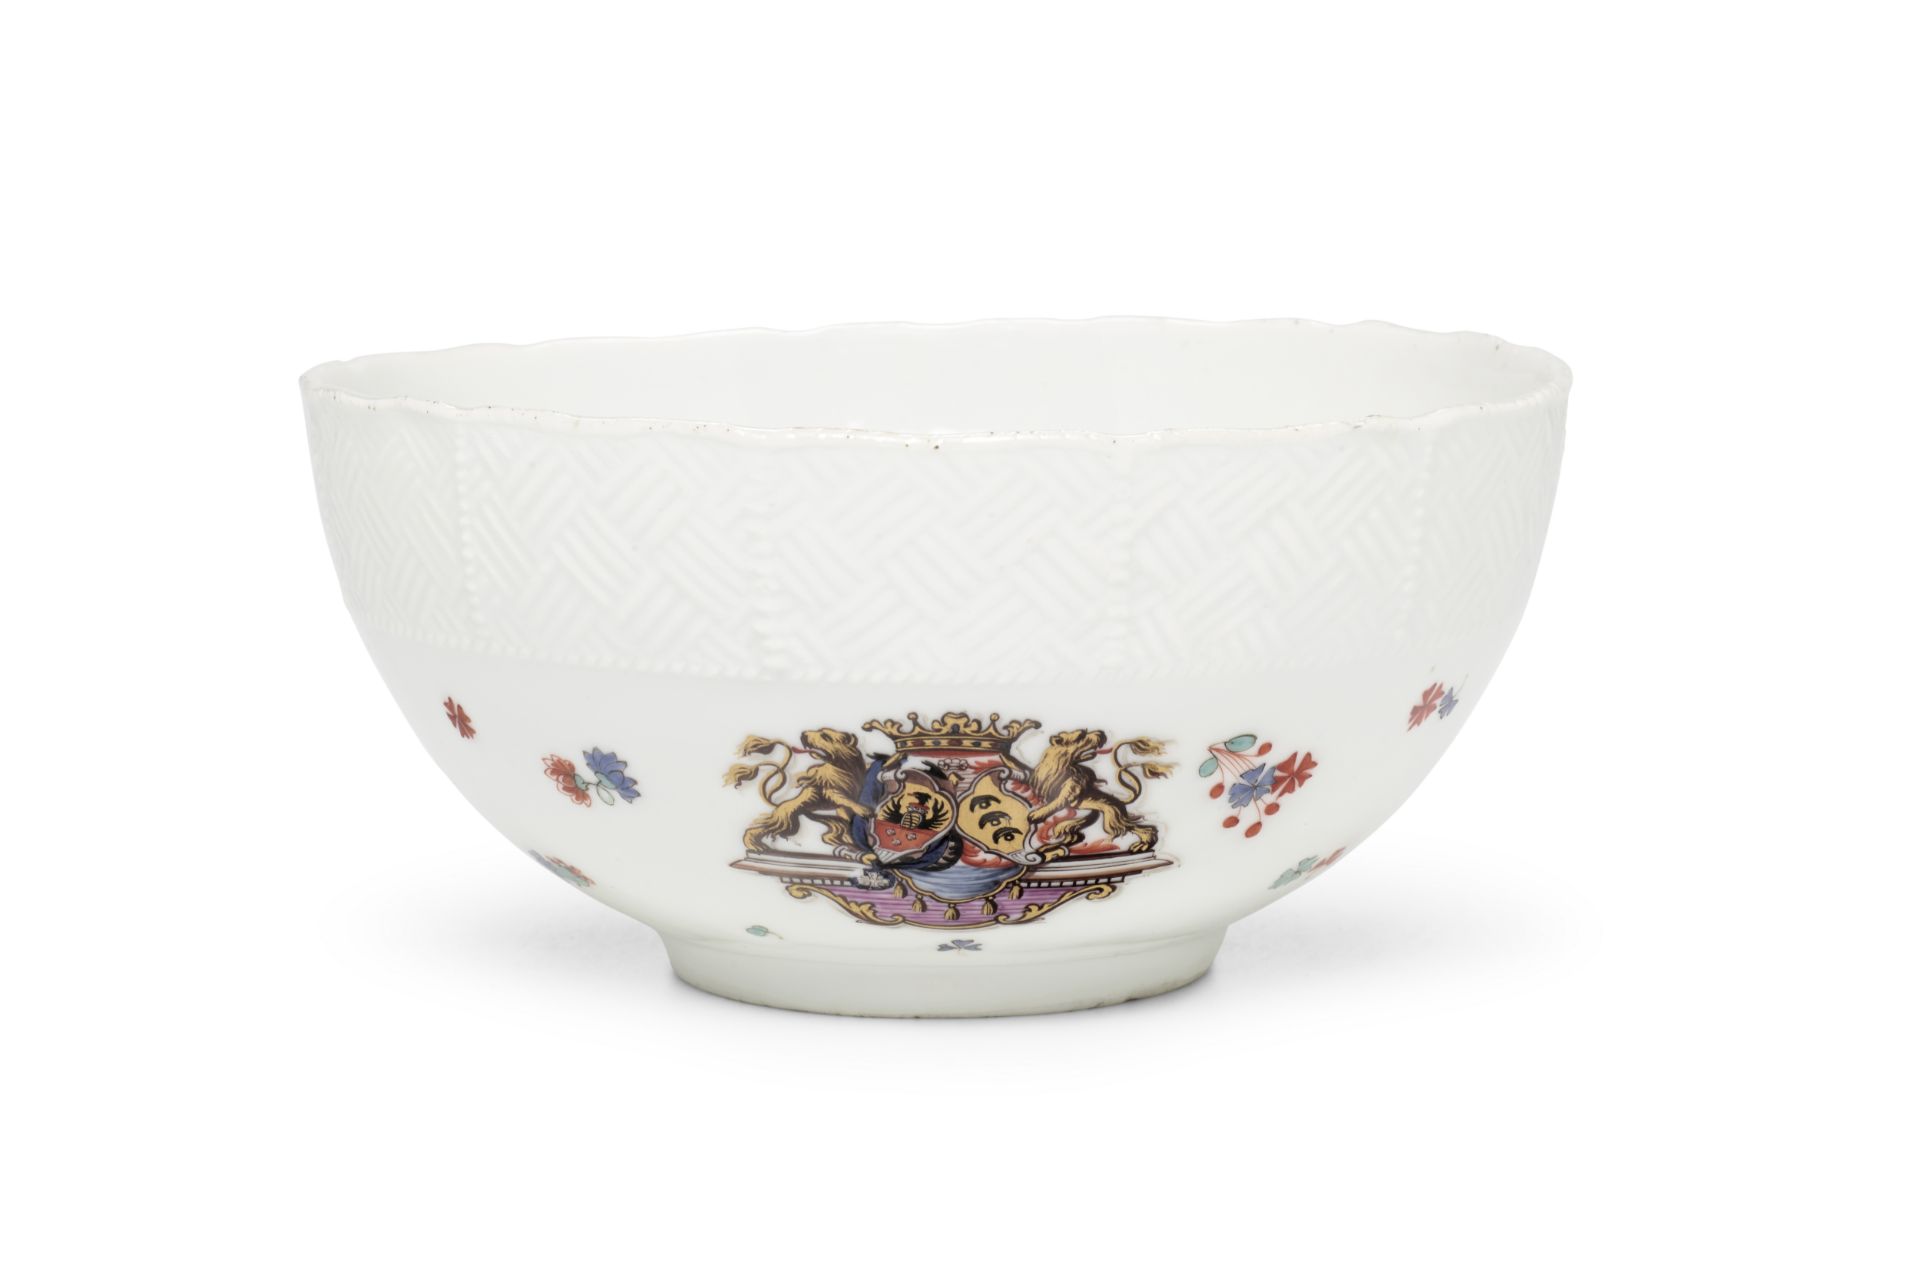 A Meissen waste bowl from the Sulkowski service, circa 1735-38